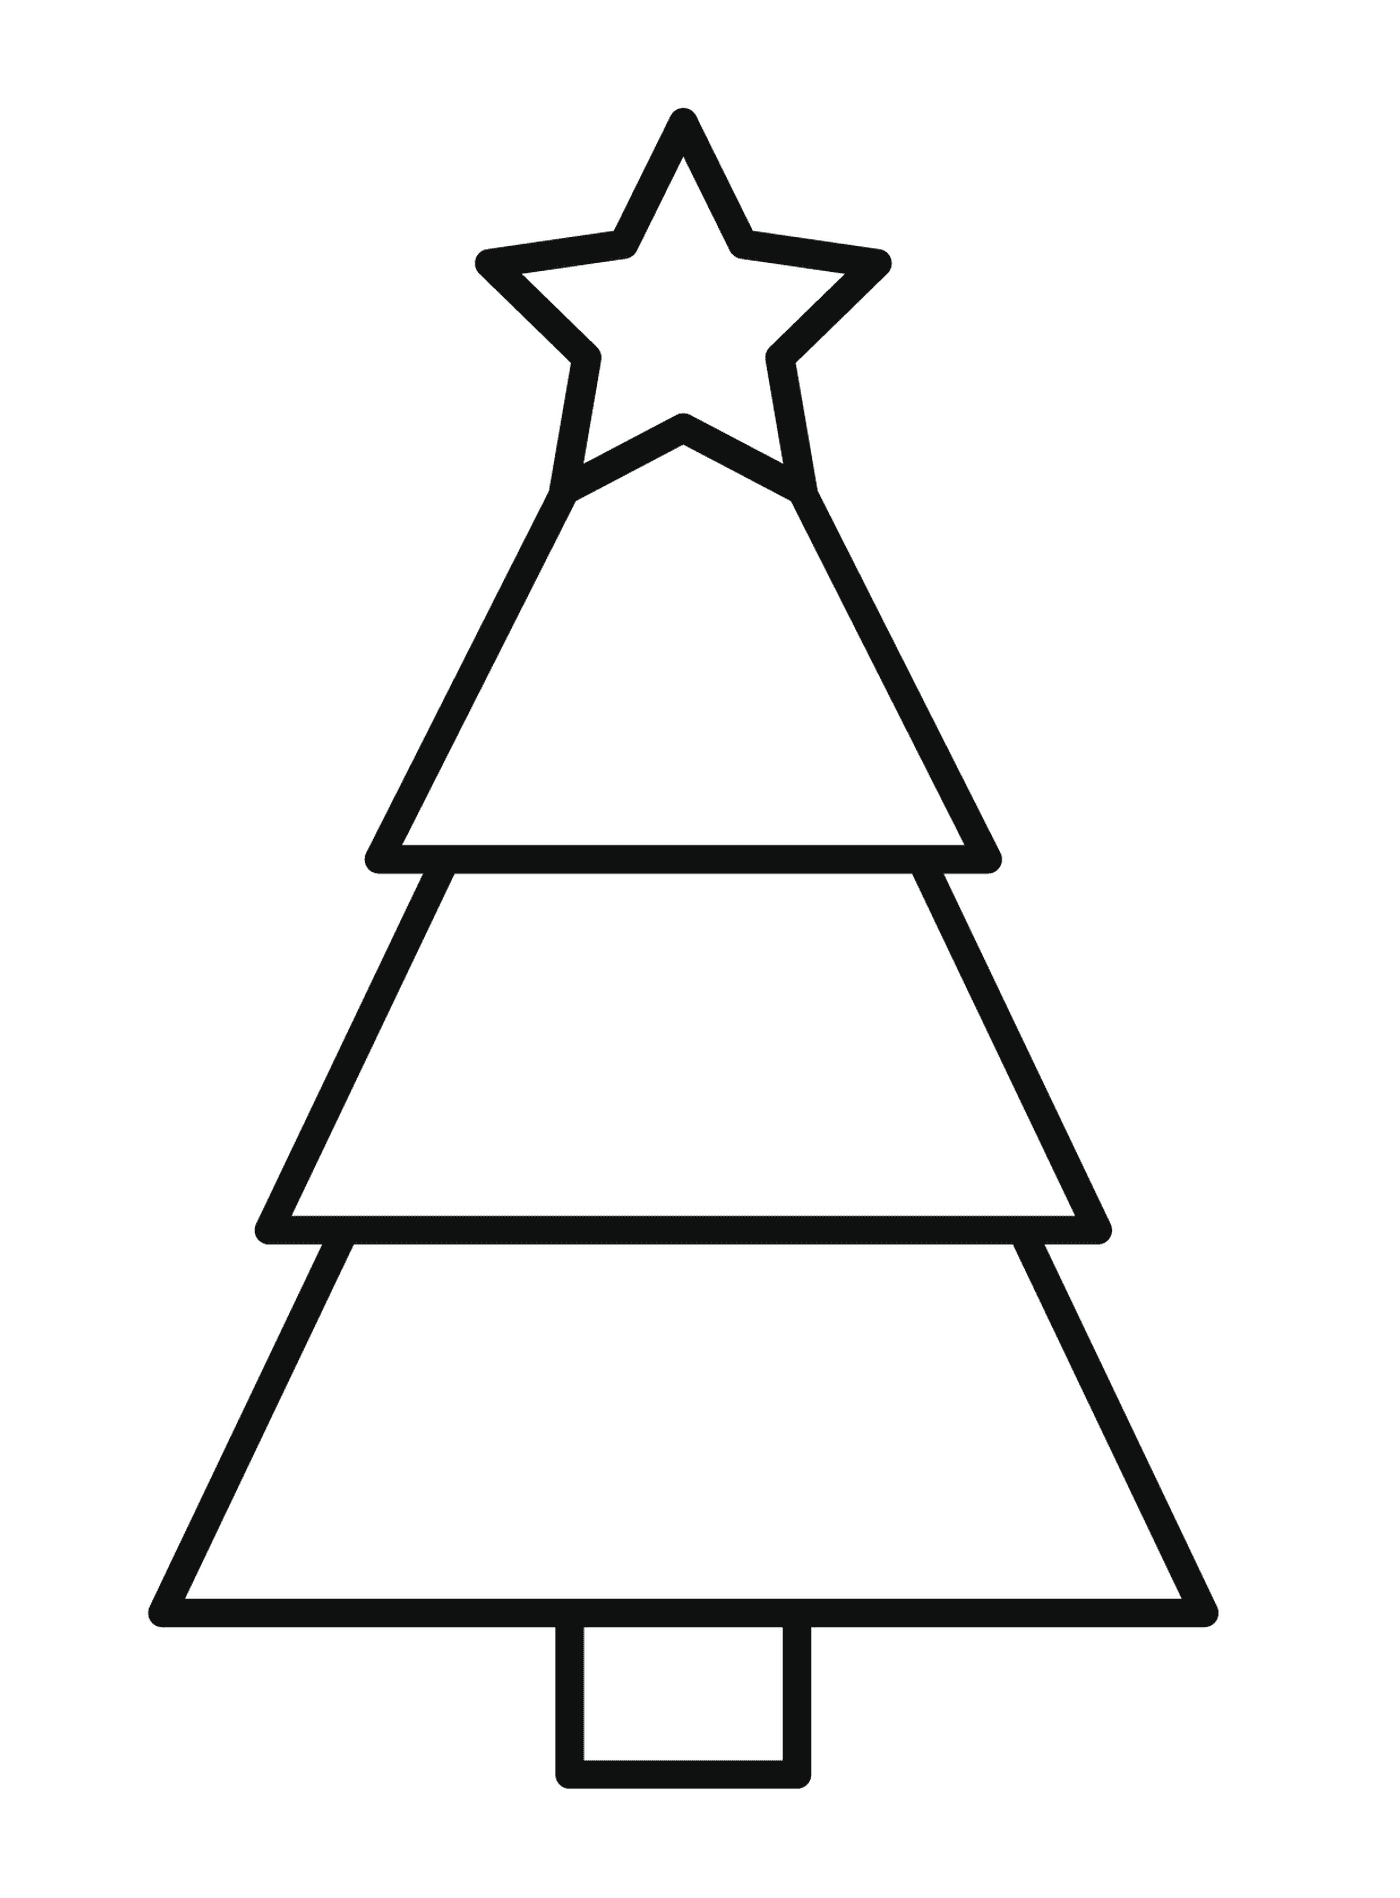  A simple Christmas tree 